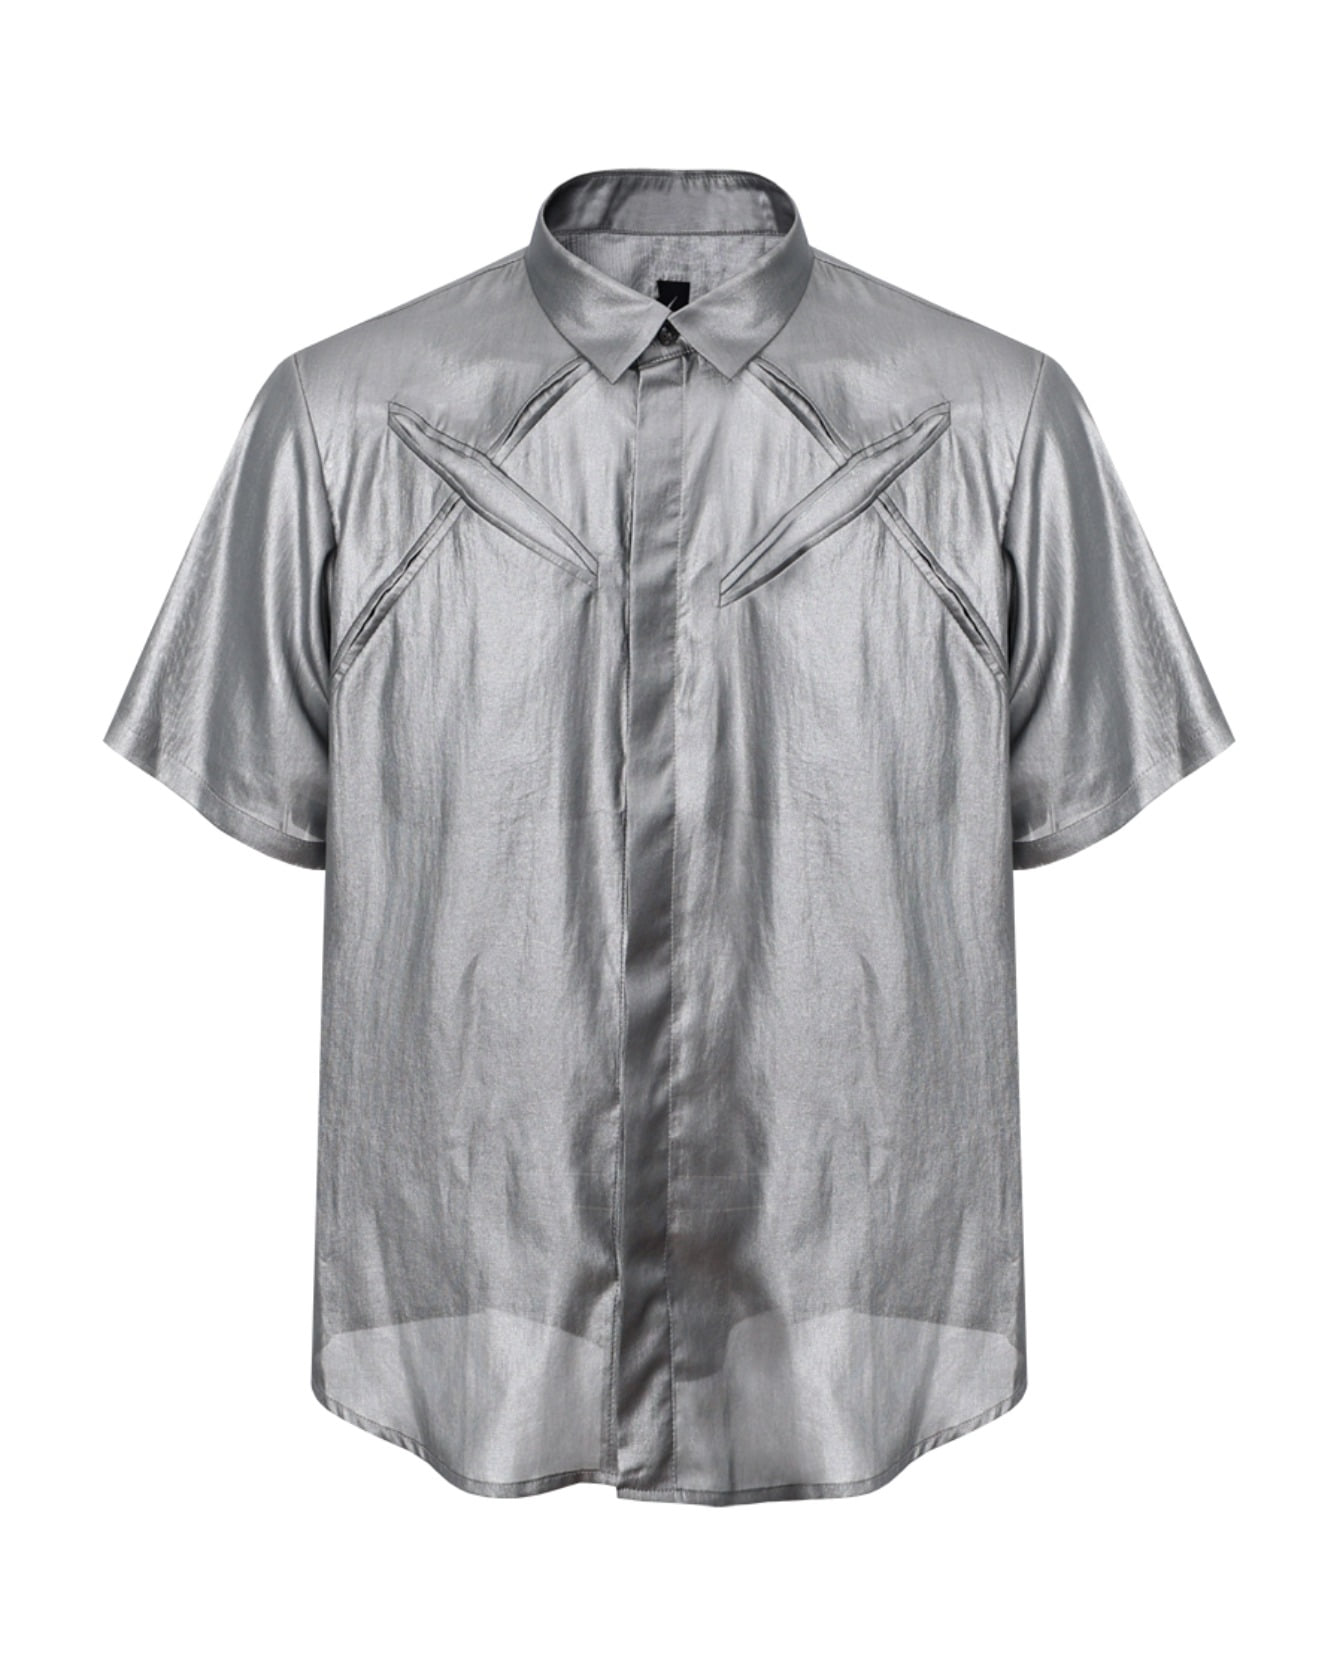 X JIP Shirts(Silver)